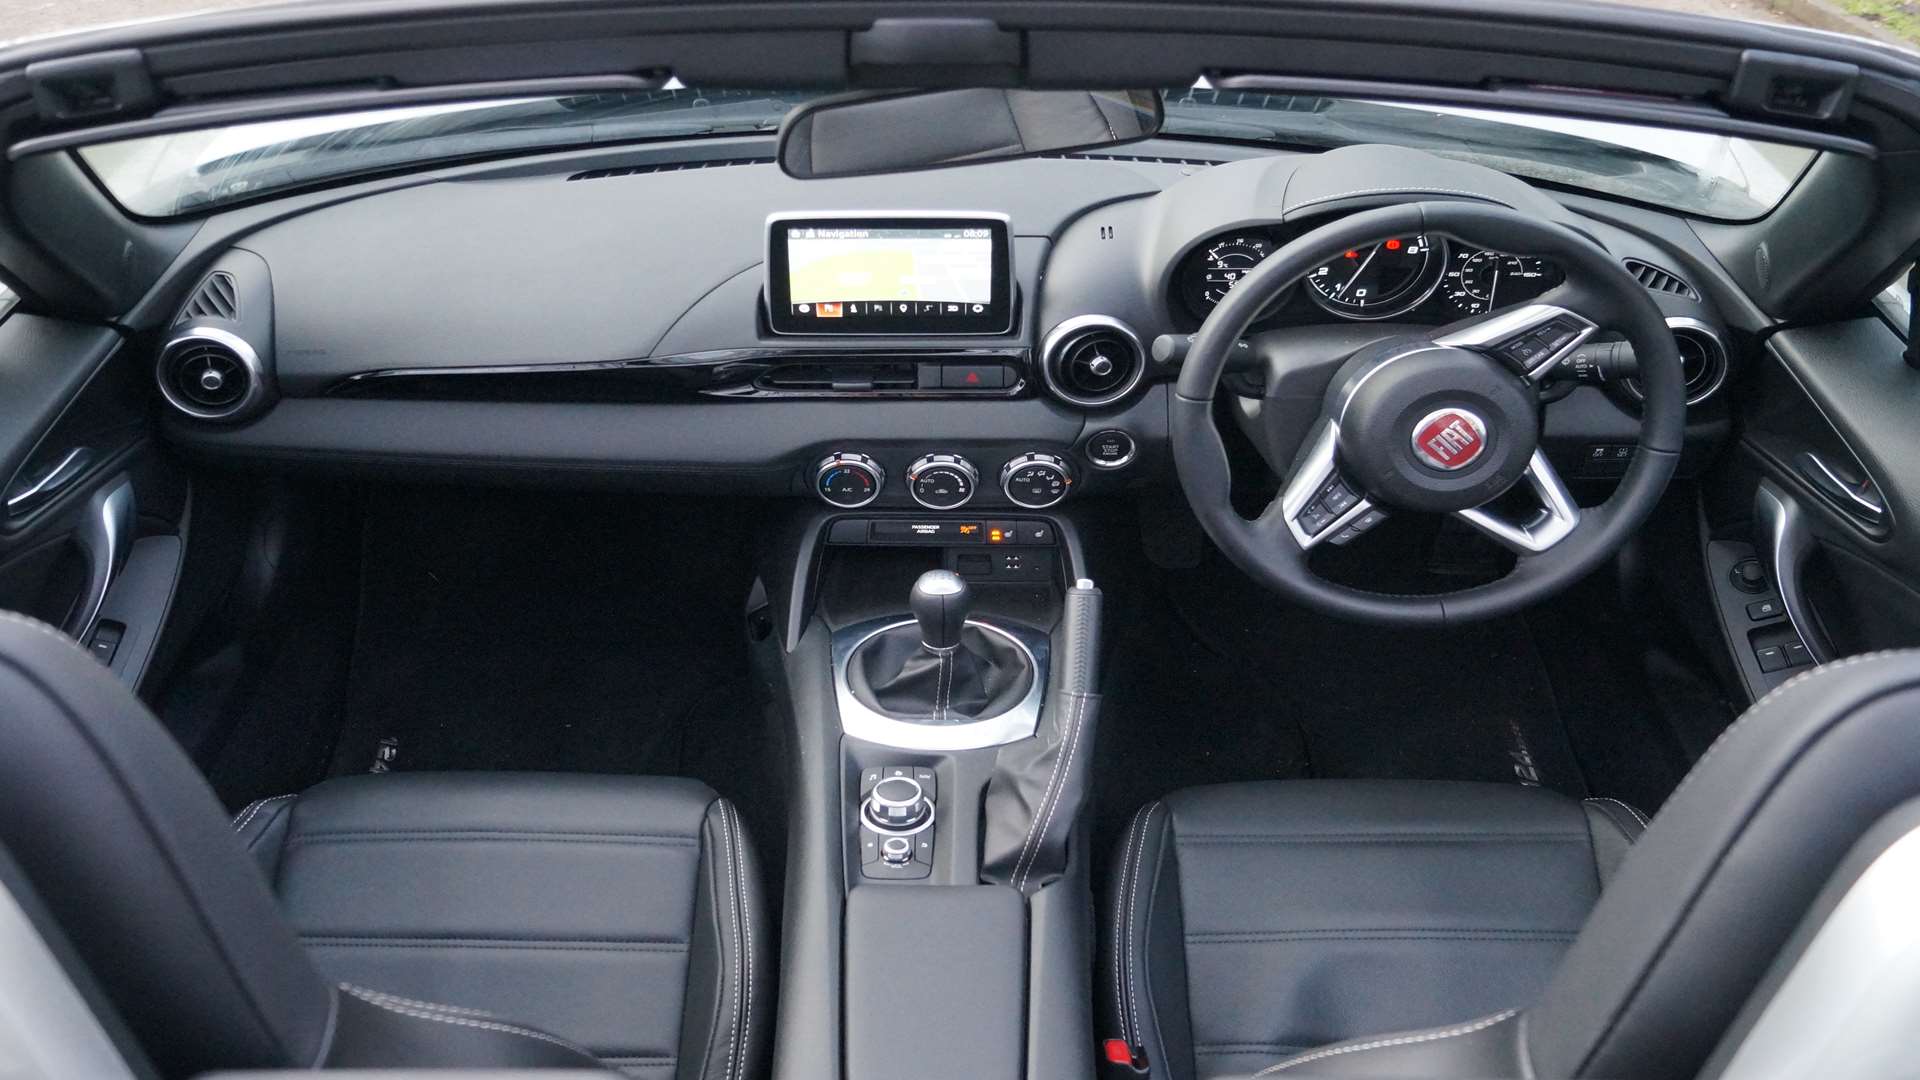 The interior may look familiar to anyone who's driven a Mazda MX-5